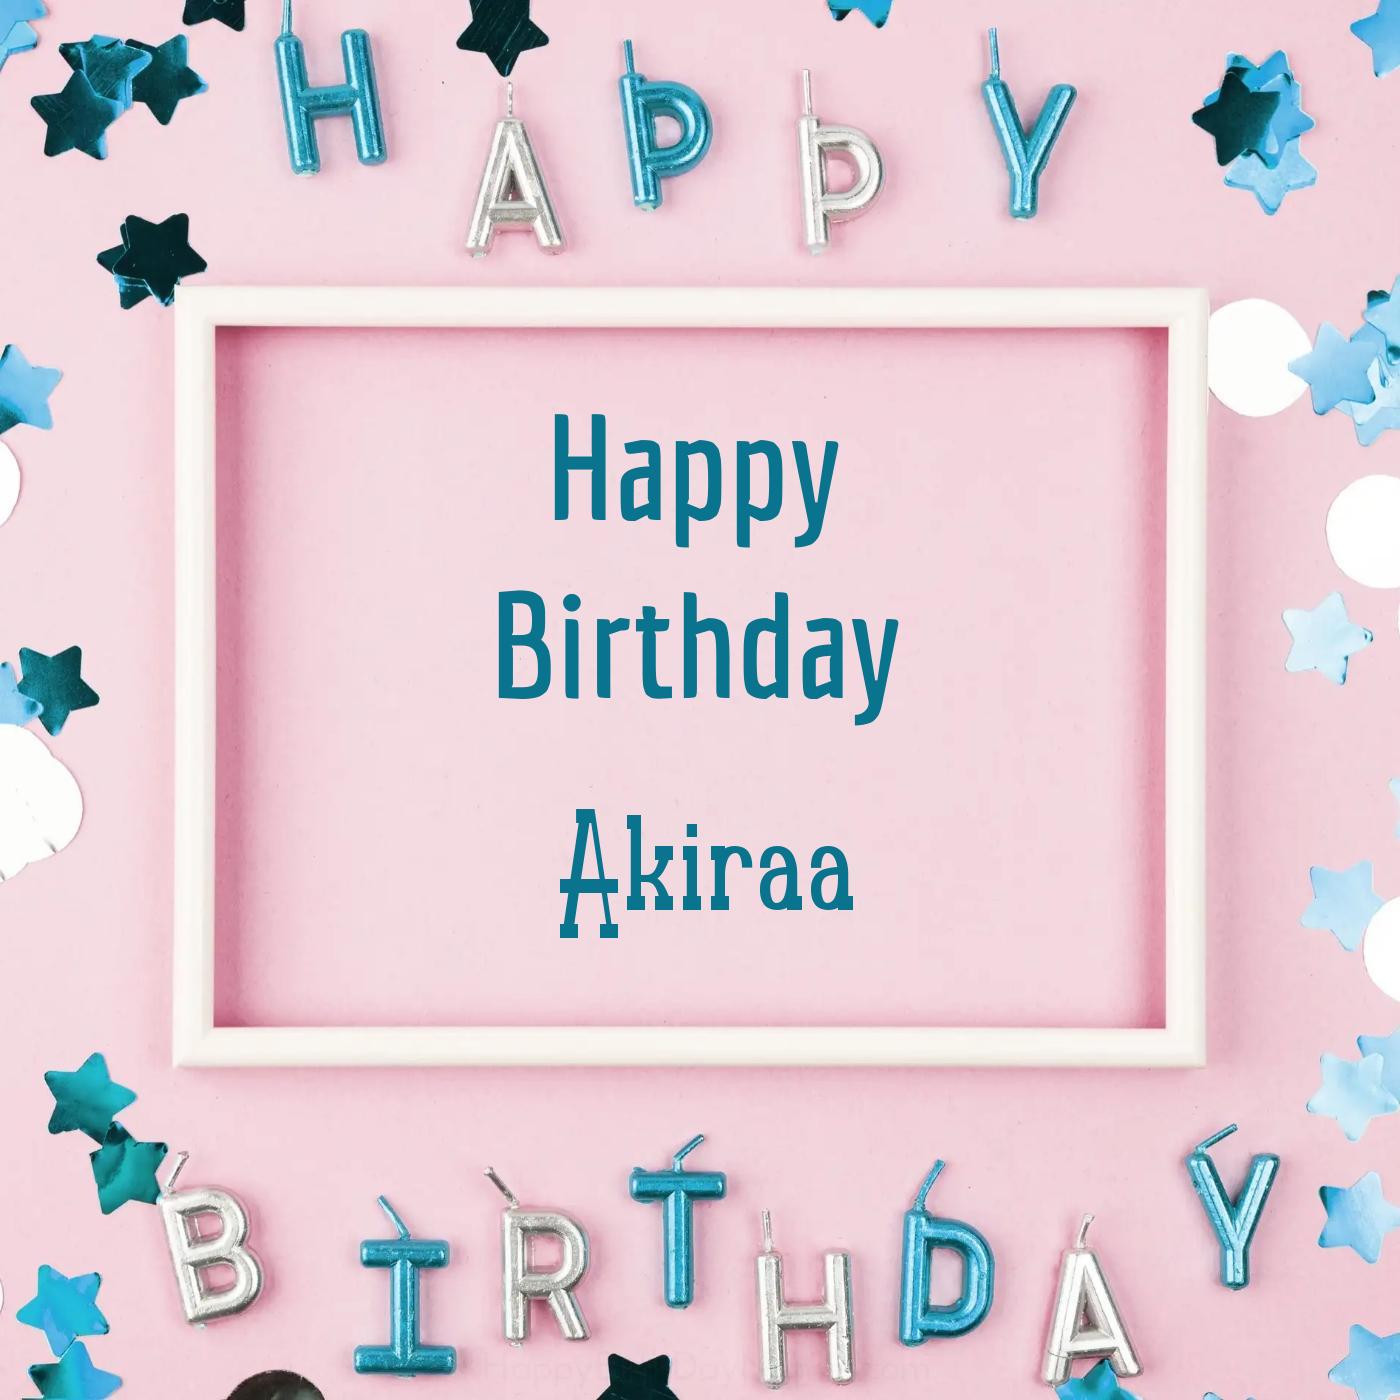 Happy Birthday Akiraa Pink Frame Card